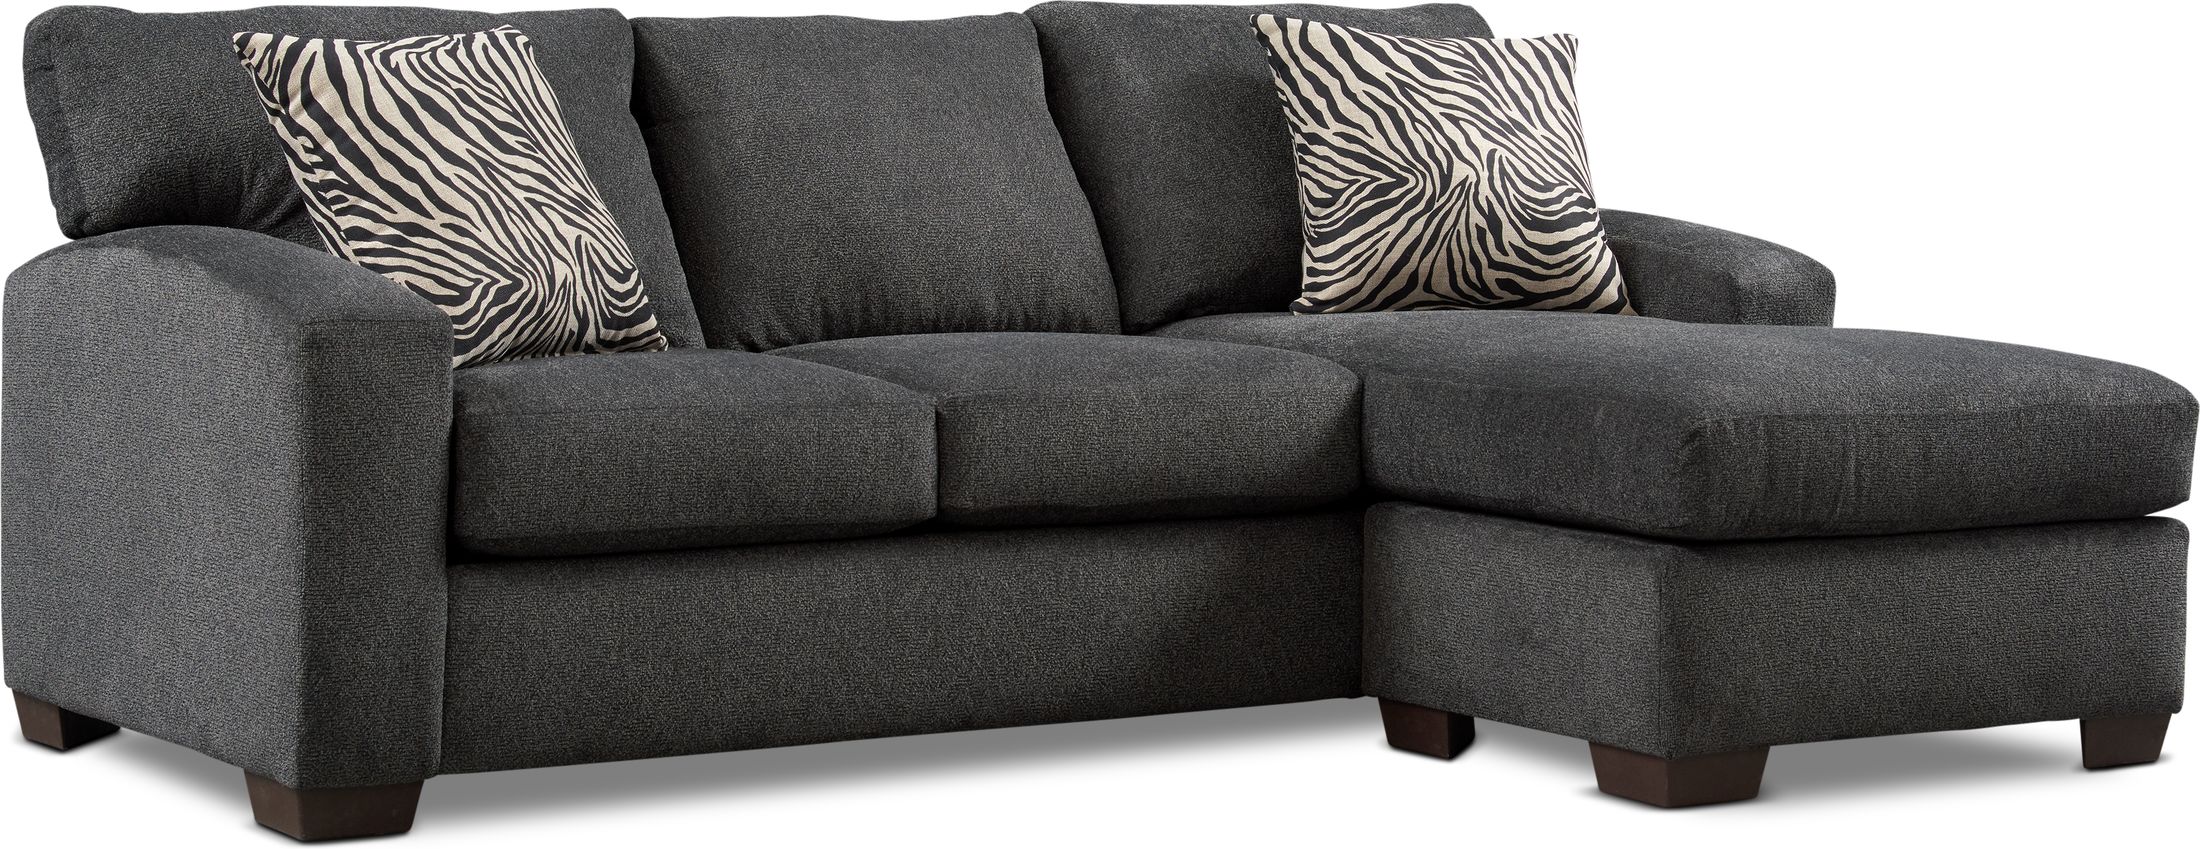 2pcs leather sofa set value city furniture